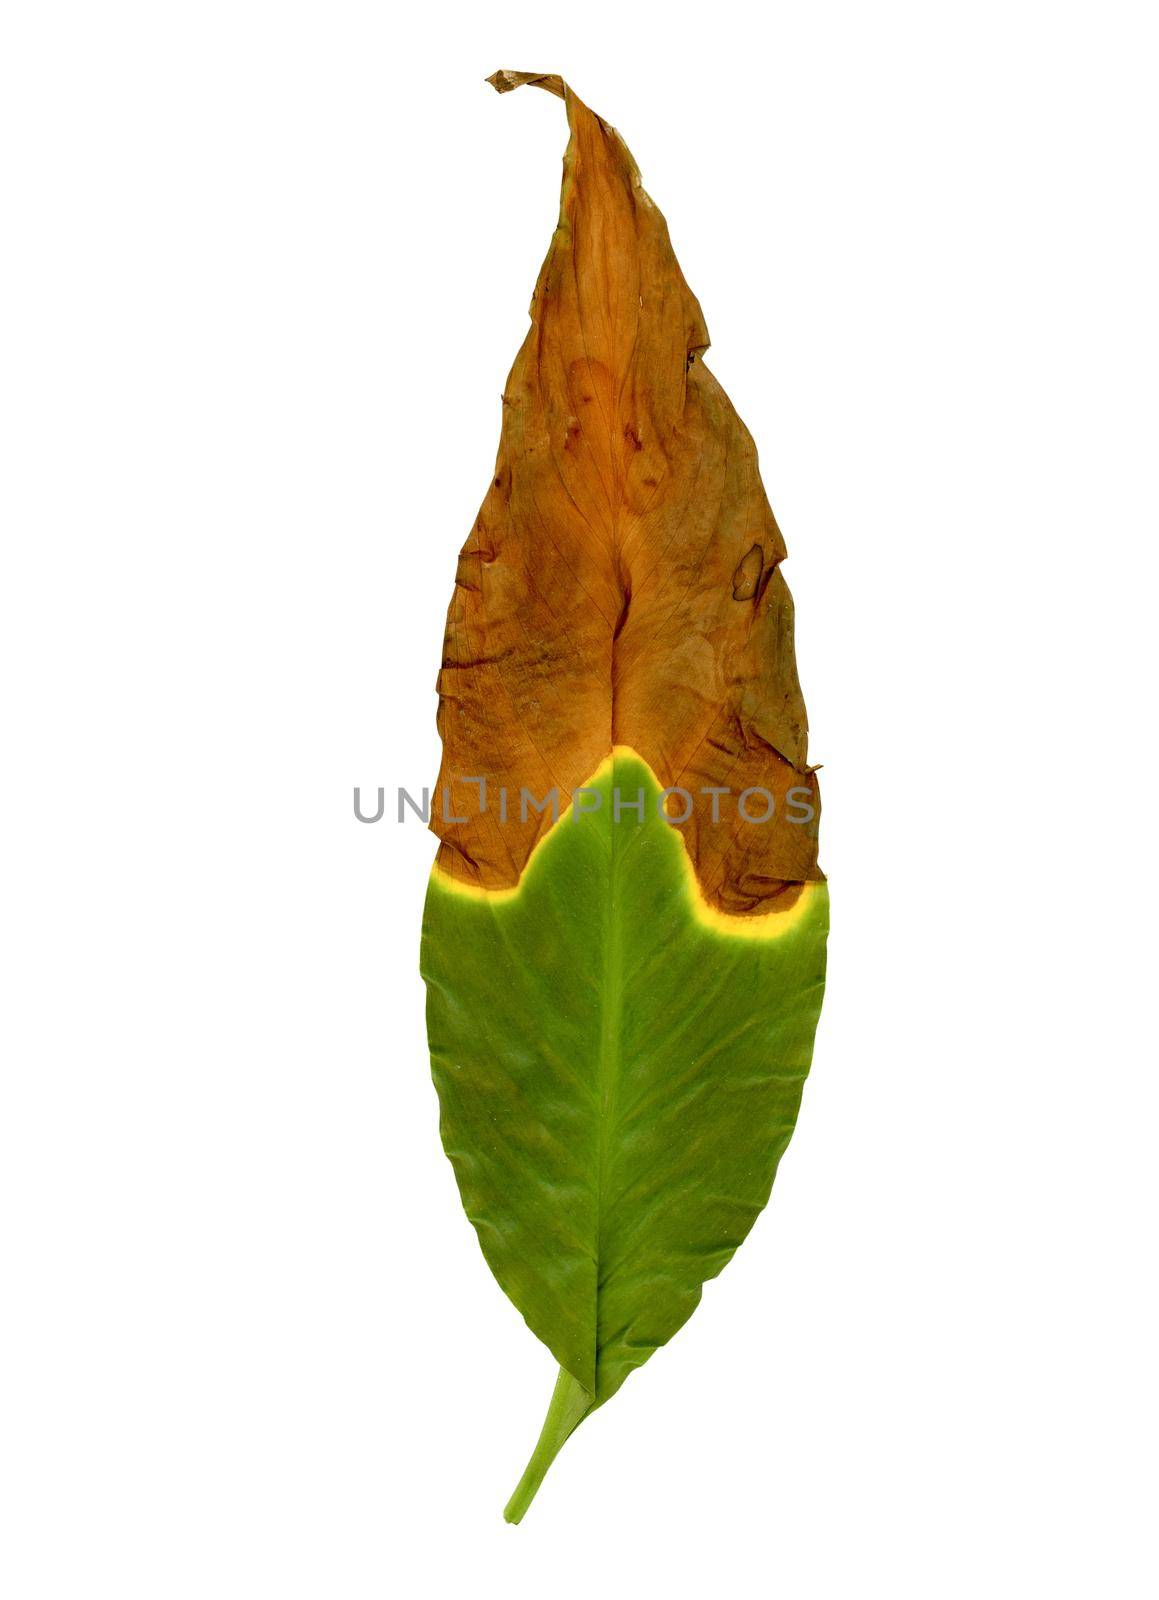 brown leaves caused by under watering, sunburn or overwatering by claudiodivizia